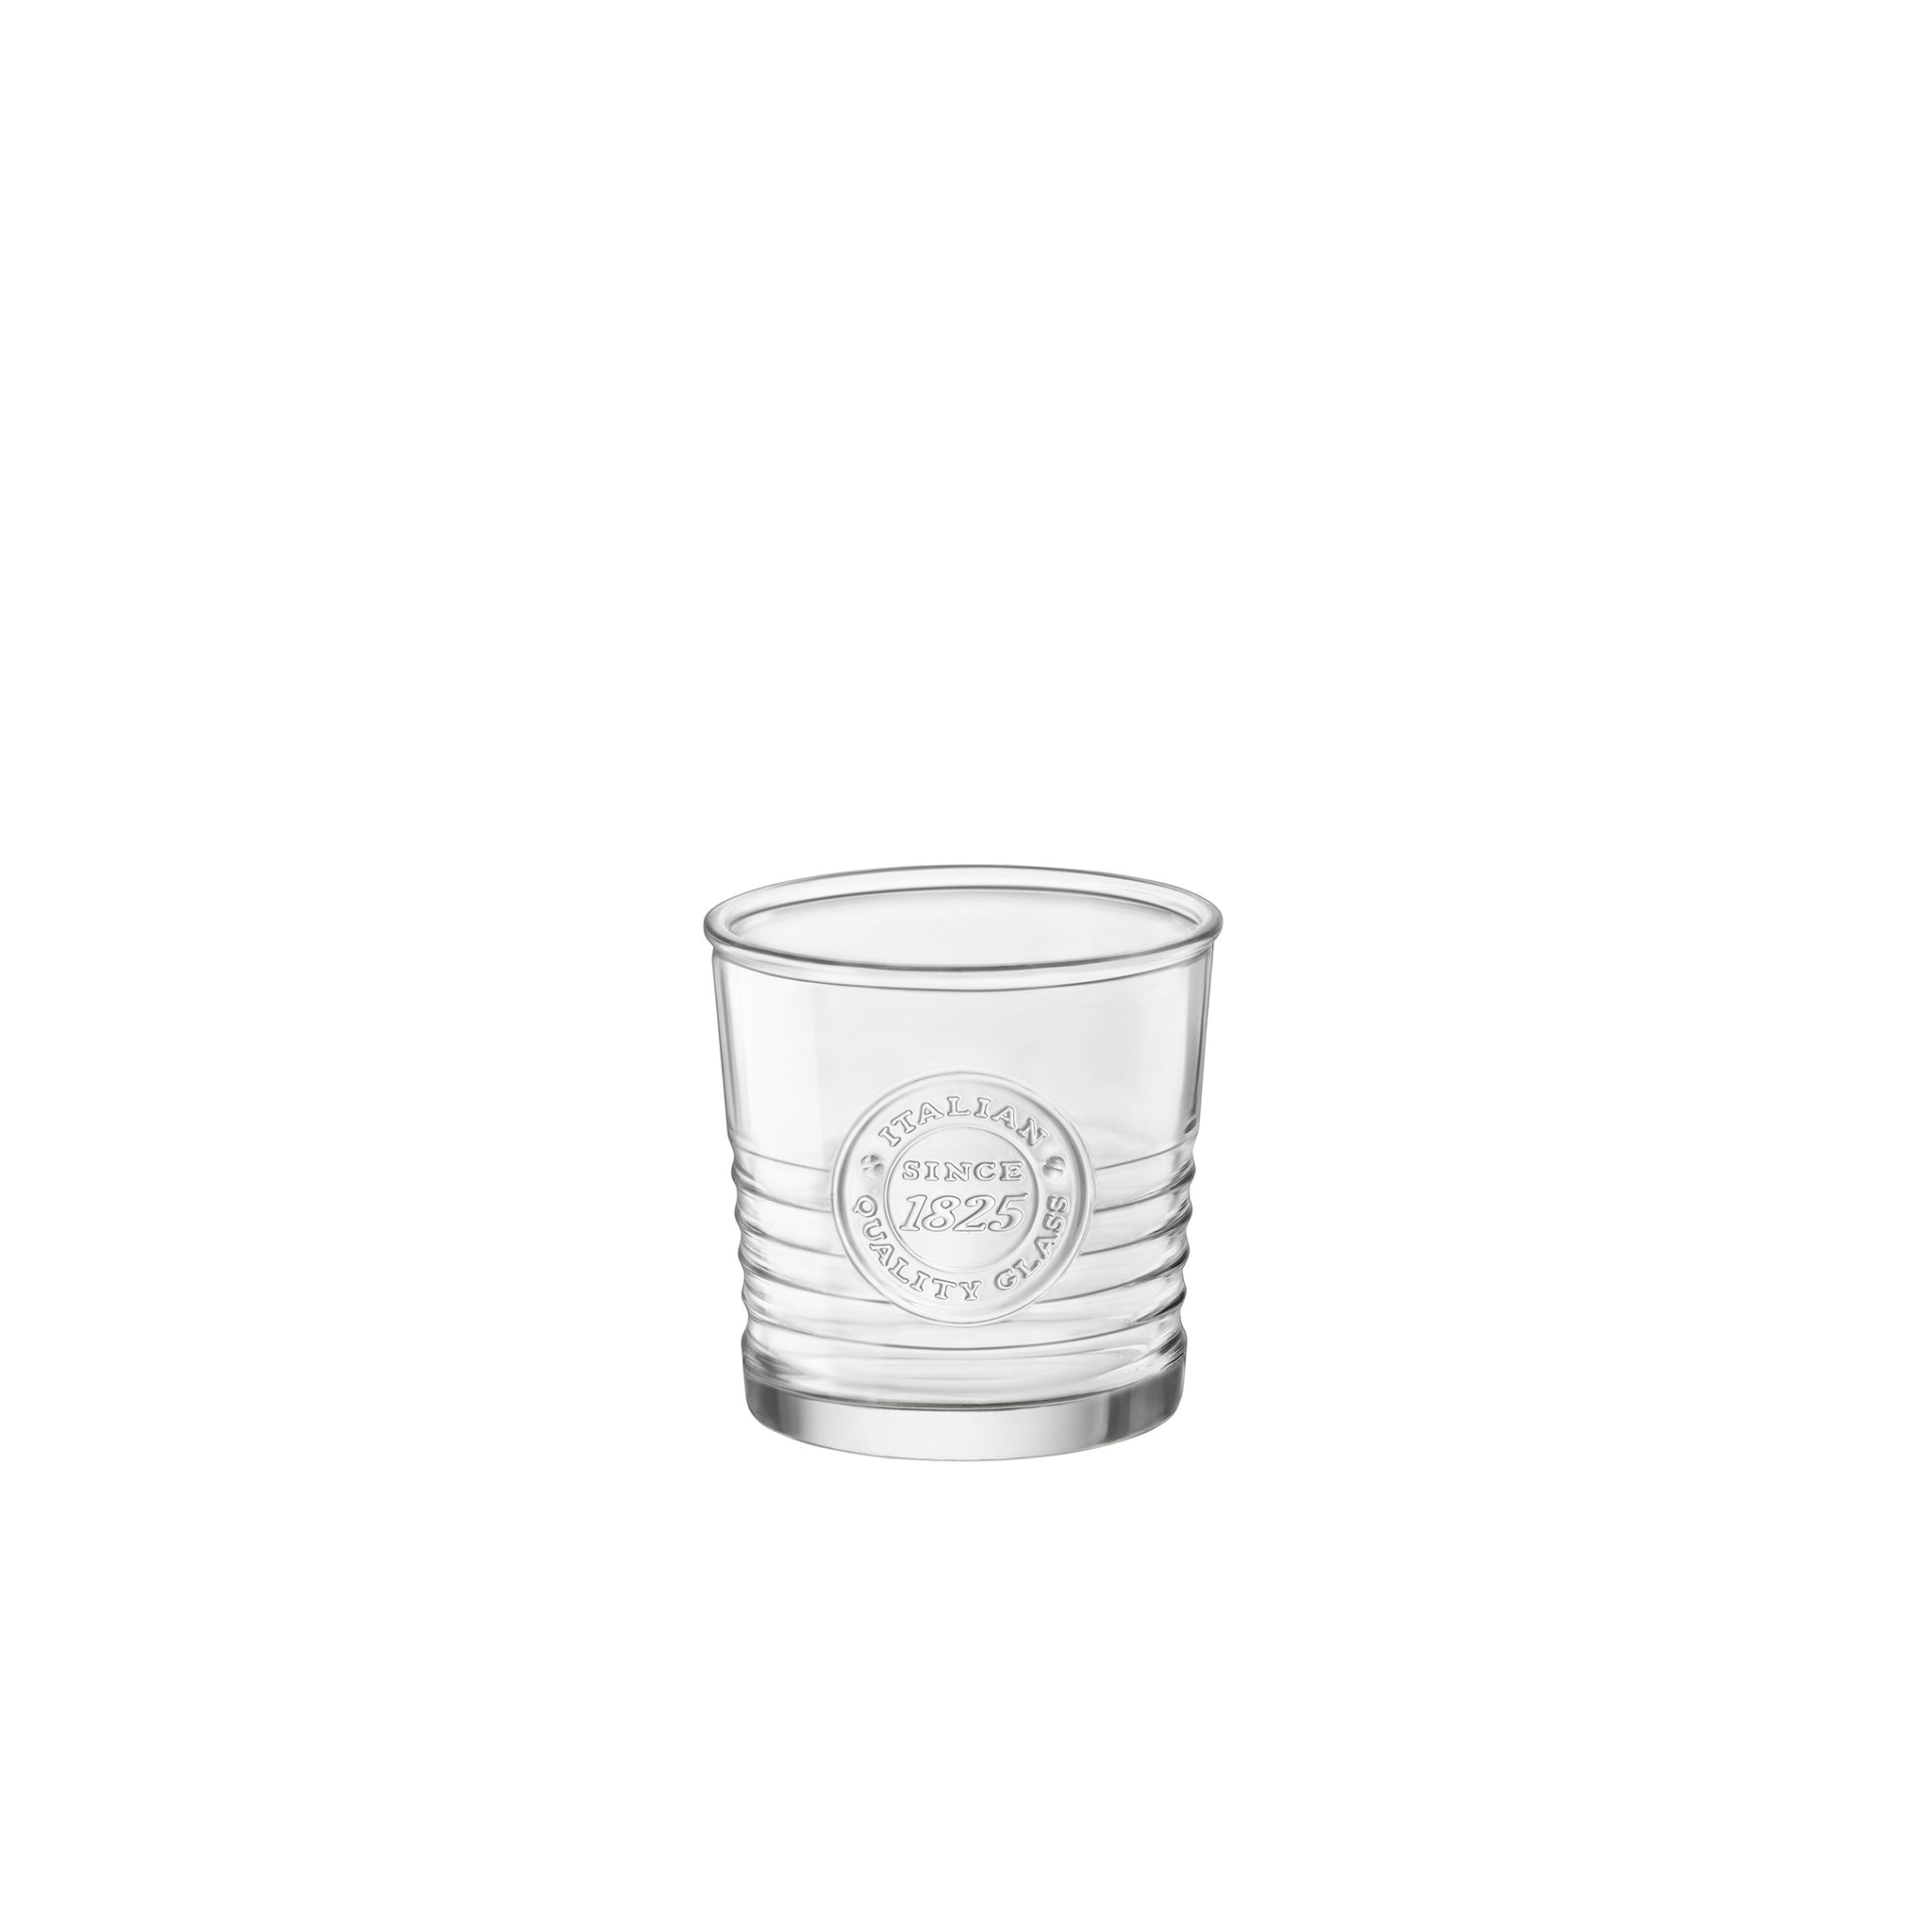 Bormioli Rocco Officina 1825 10 oz. DOF Drinking Glasses (Set of 4)